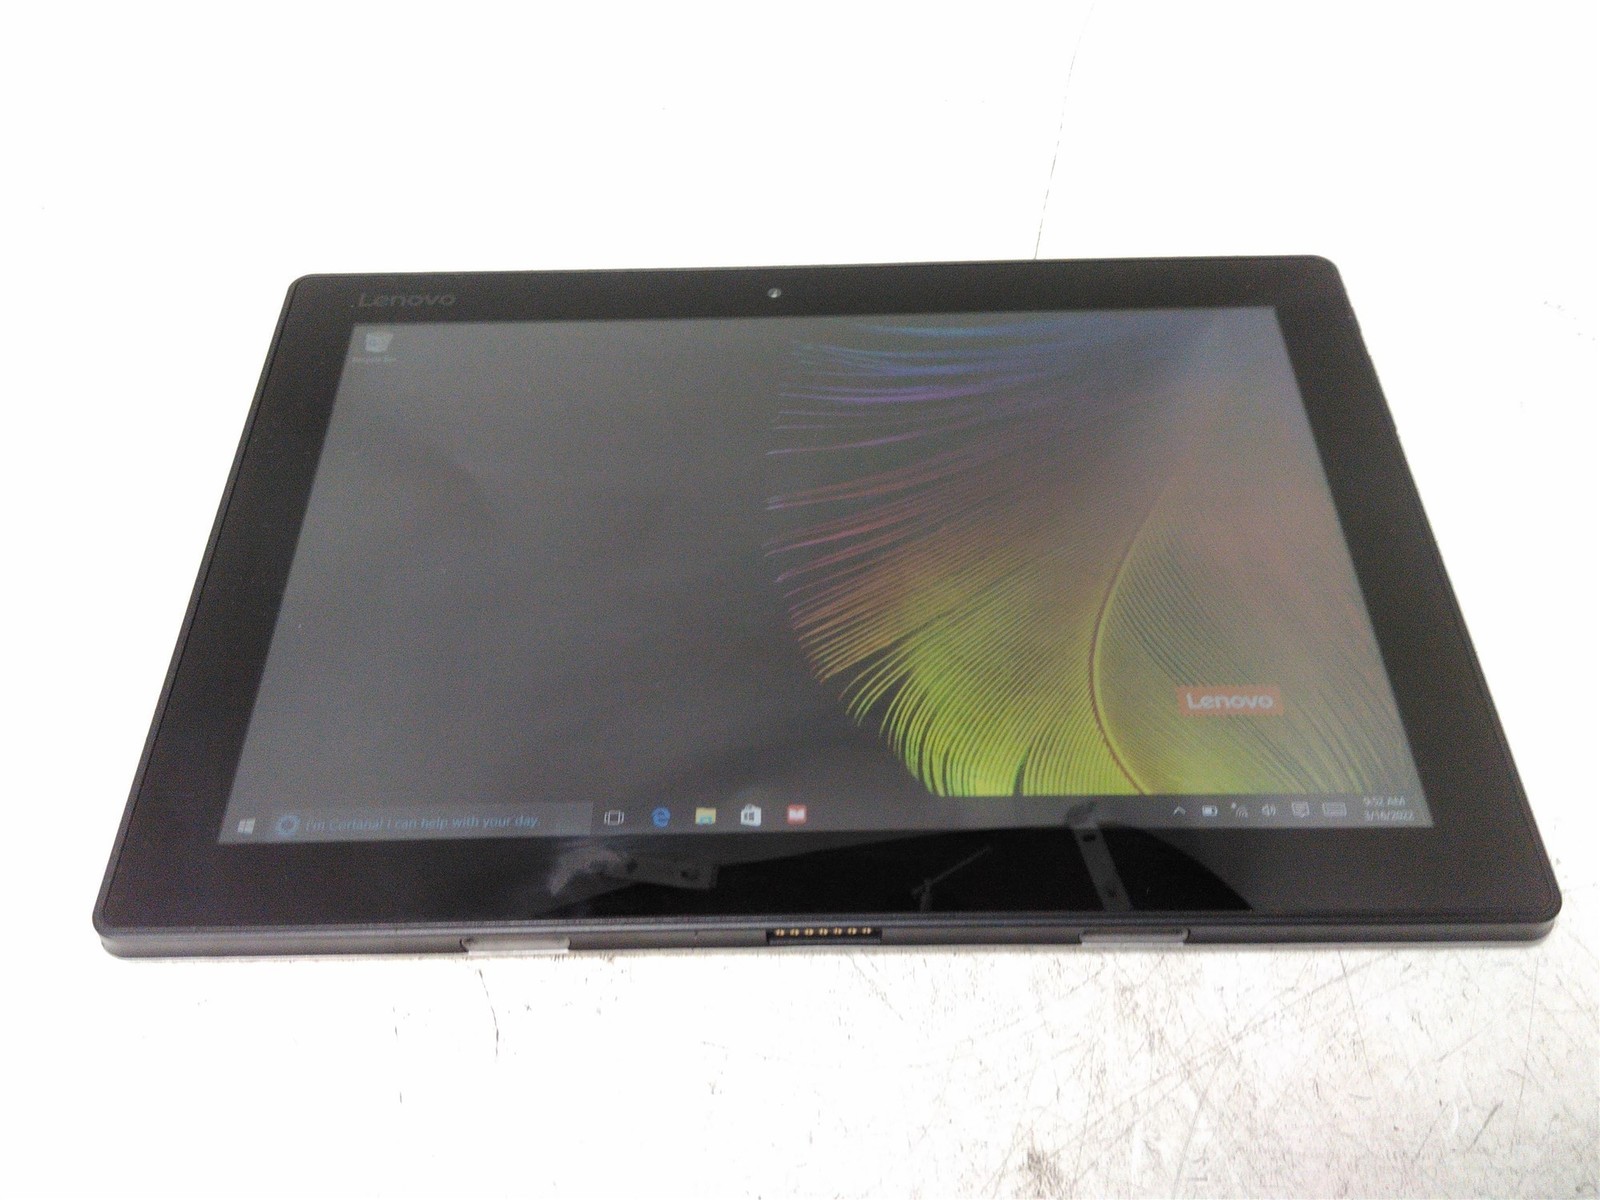 Primary image for Lenovo MIIX 310-10ICR Tablet Computer Atom x5 1.44GHz 2GB 32GB NO PSU